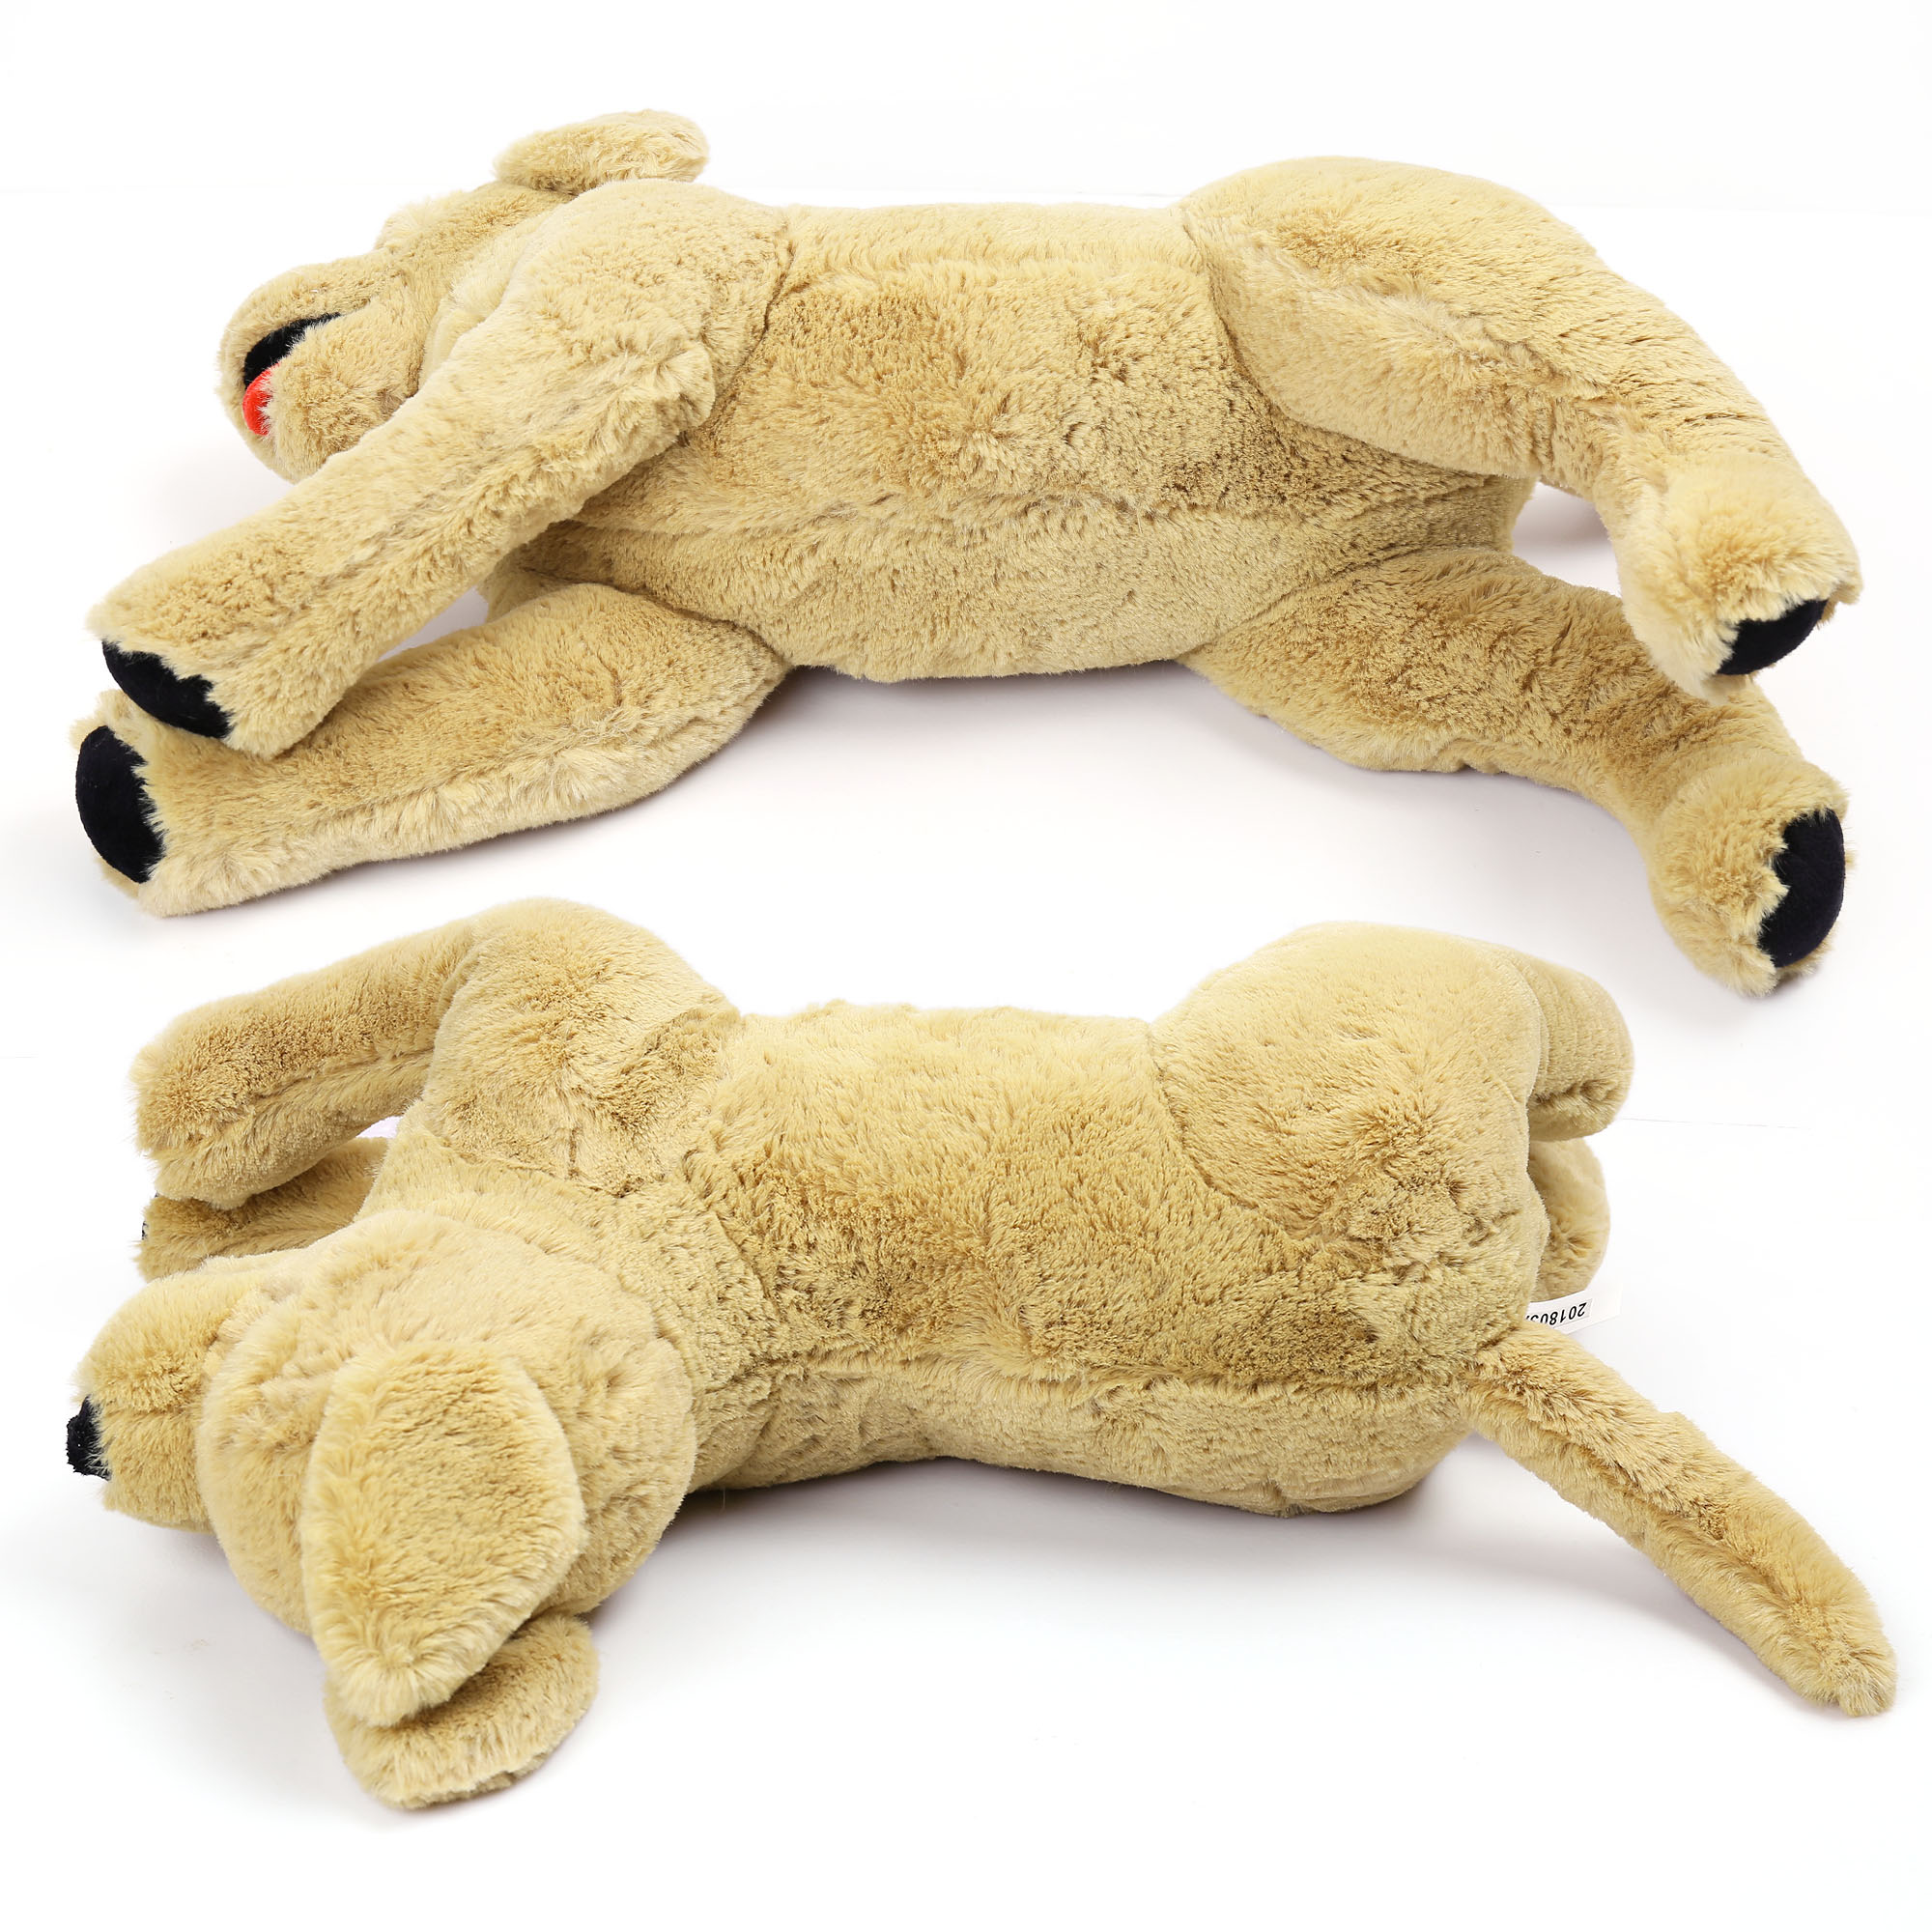 21 in Large Dog Stuffed Animals Plush Golden Retriever Plush Toys Valentine s Day 3